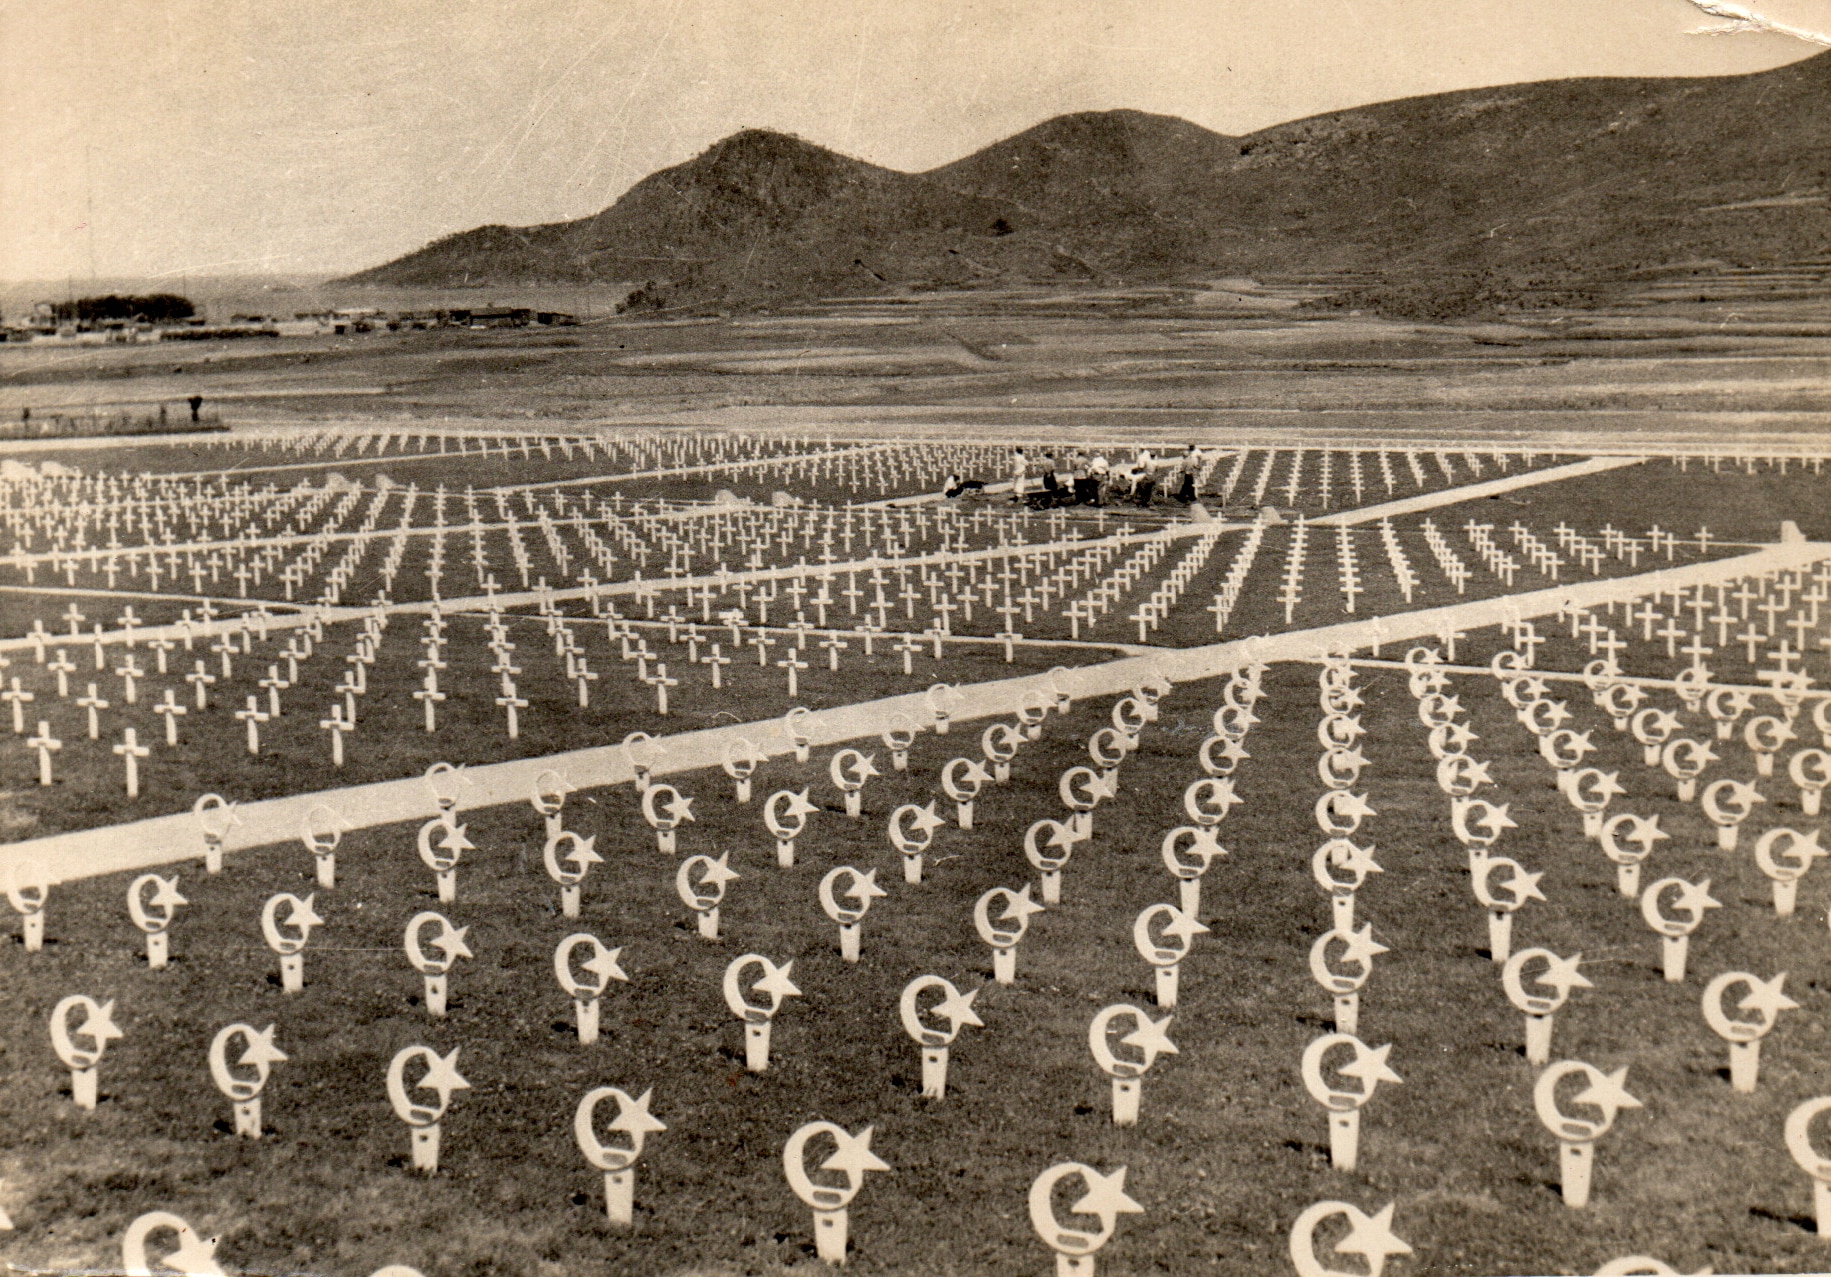 United Nations Memorial Cemetery in Busan, Korea in 1953